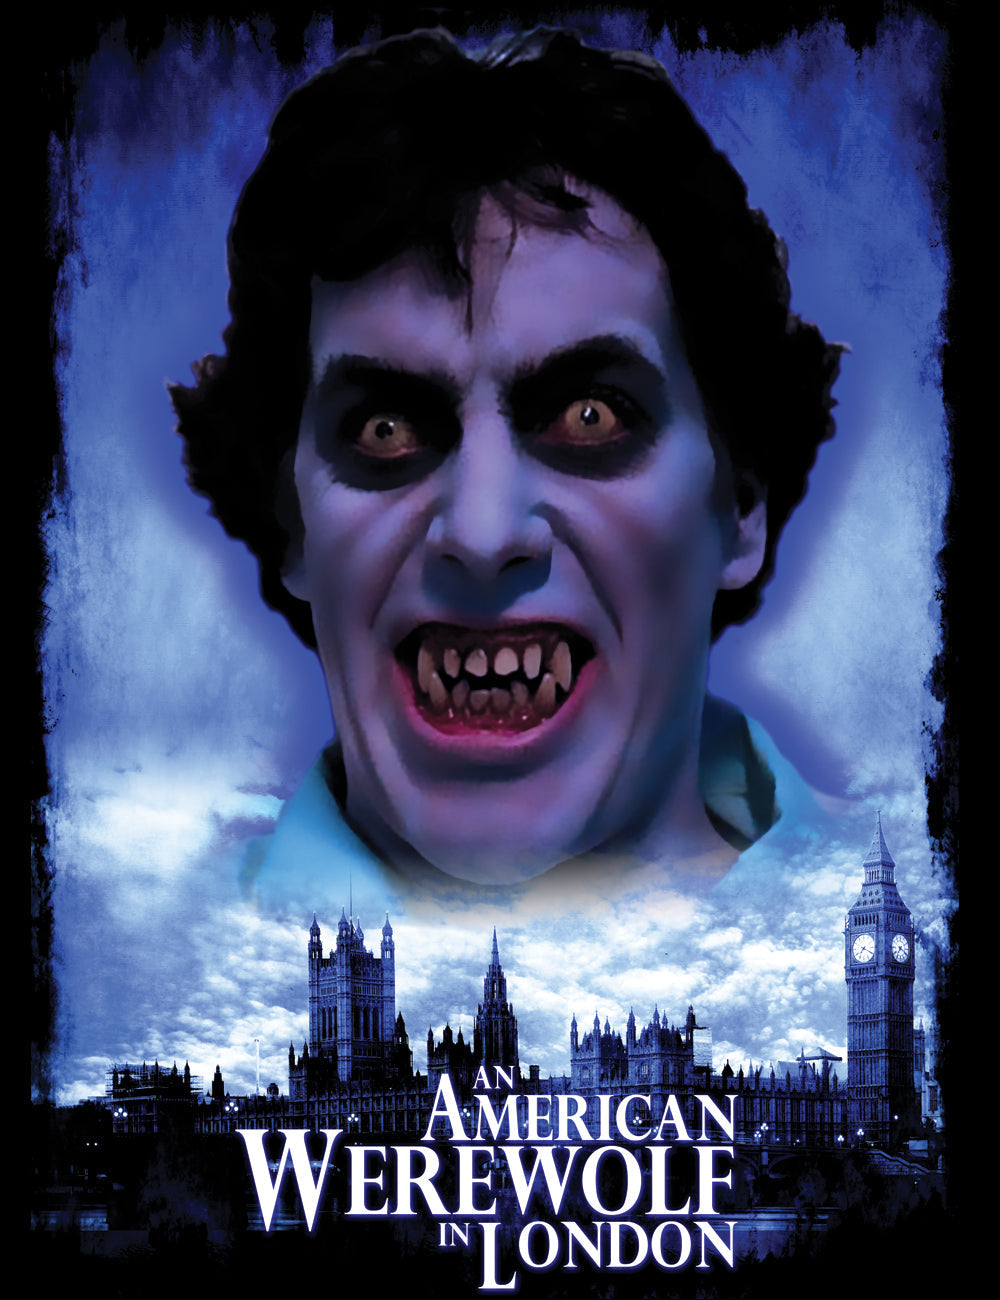 An American Werewolf In London T-Shirt Cult Horror Movie